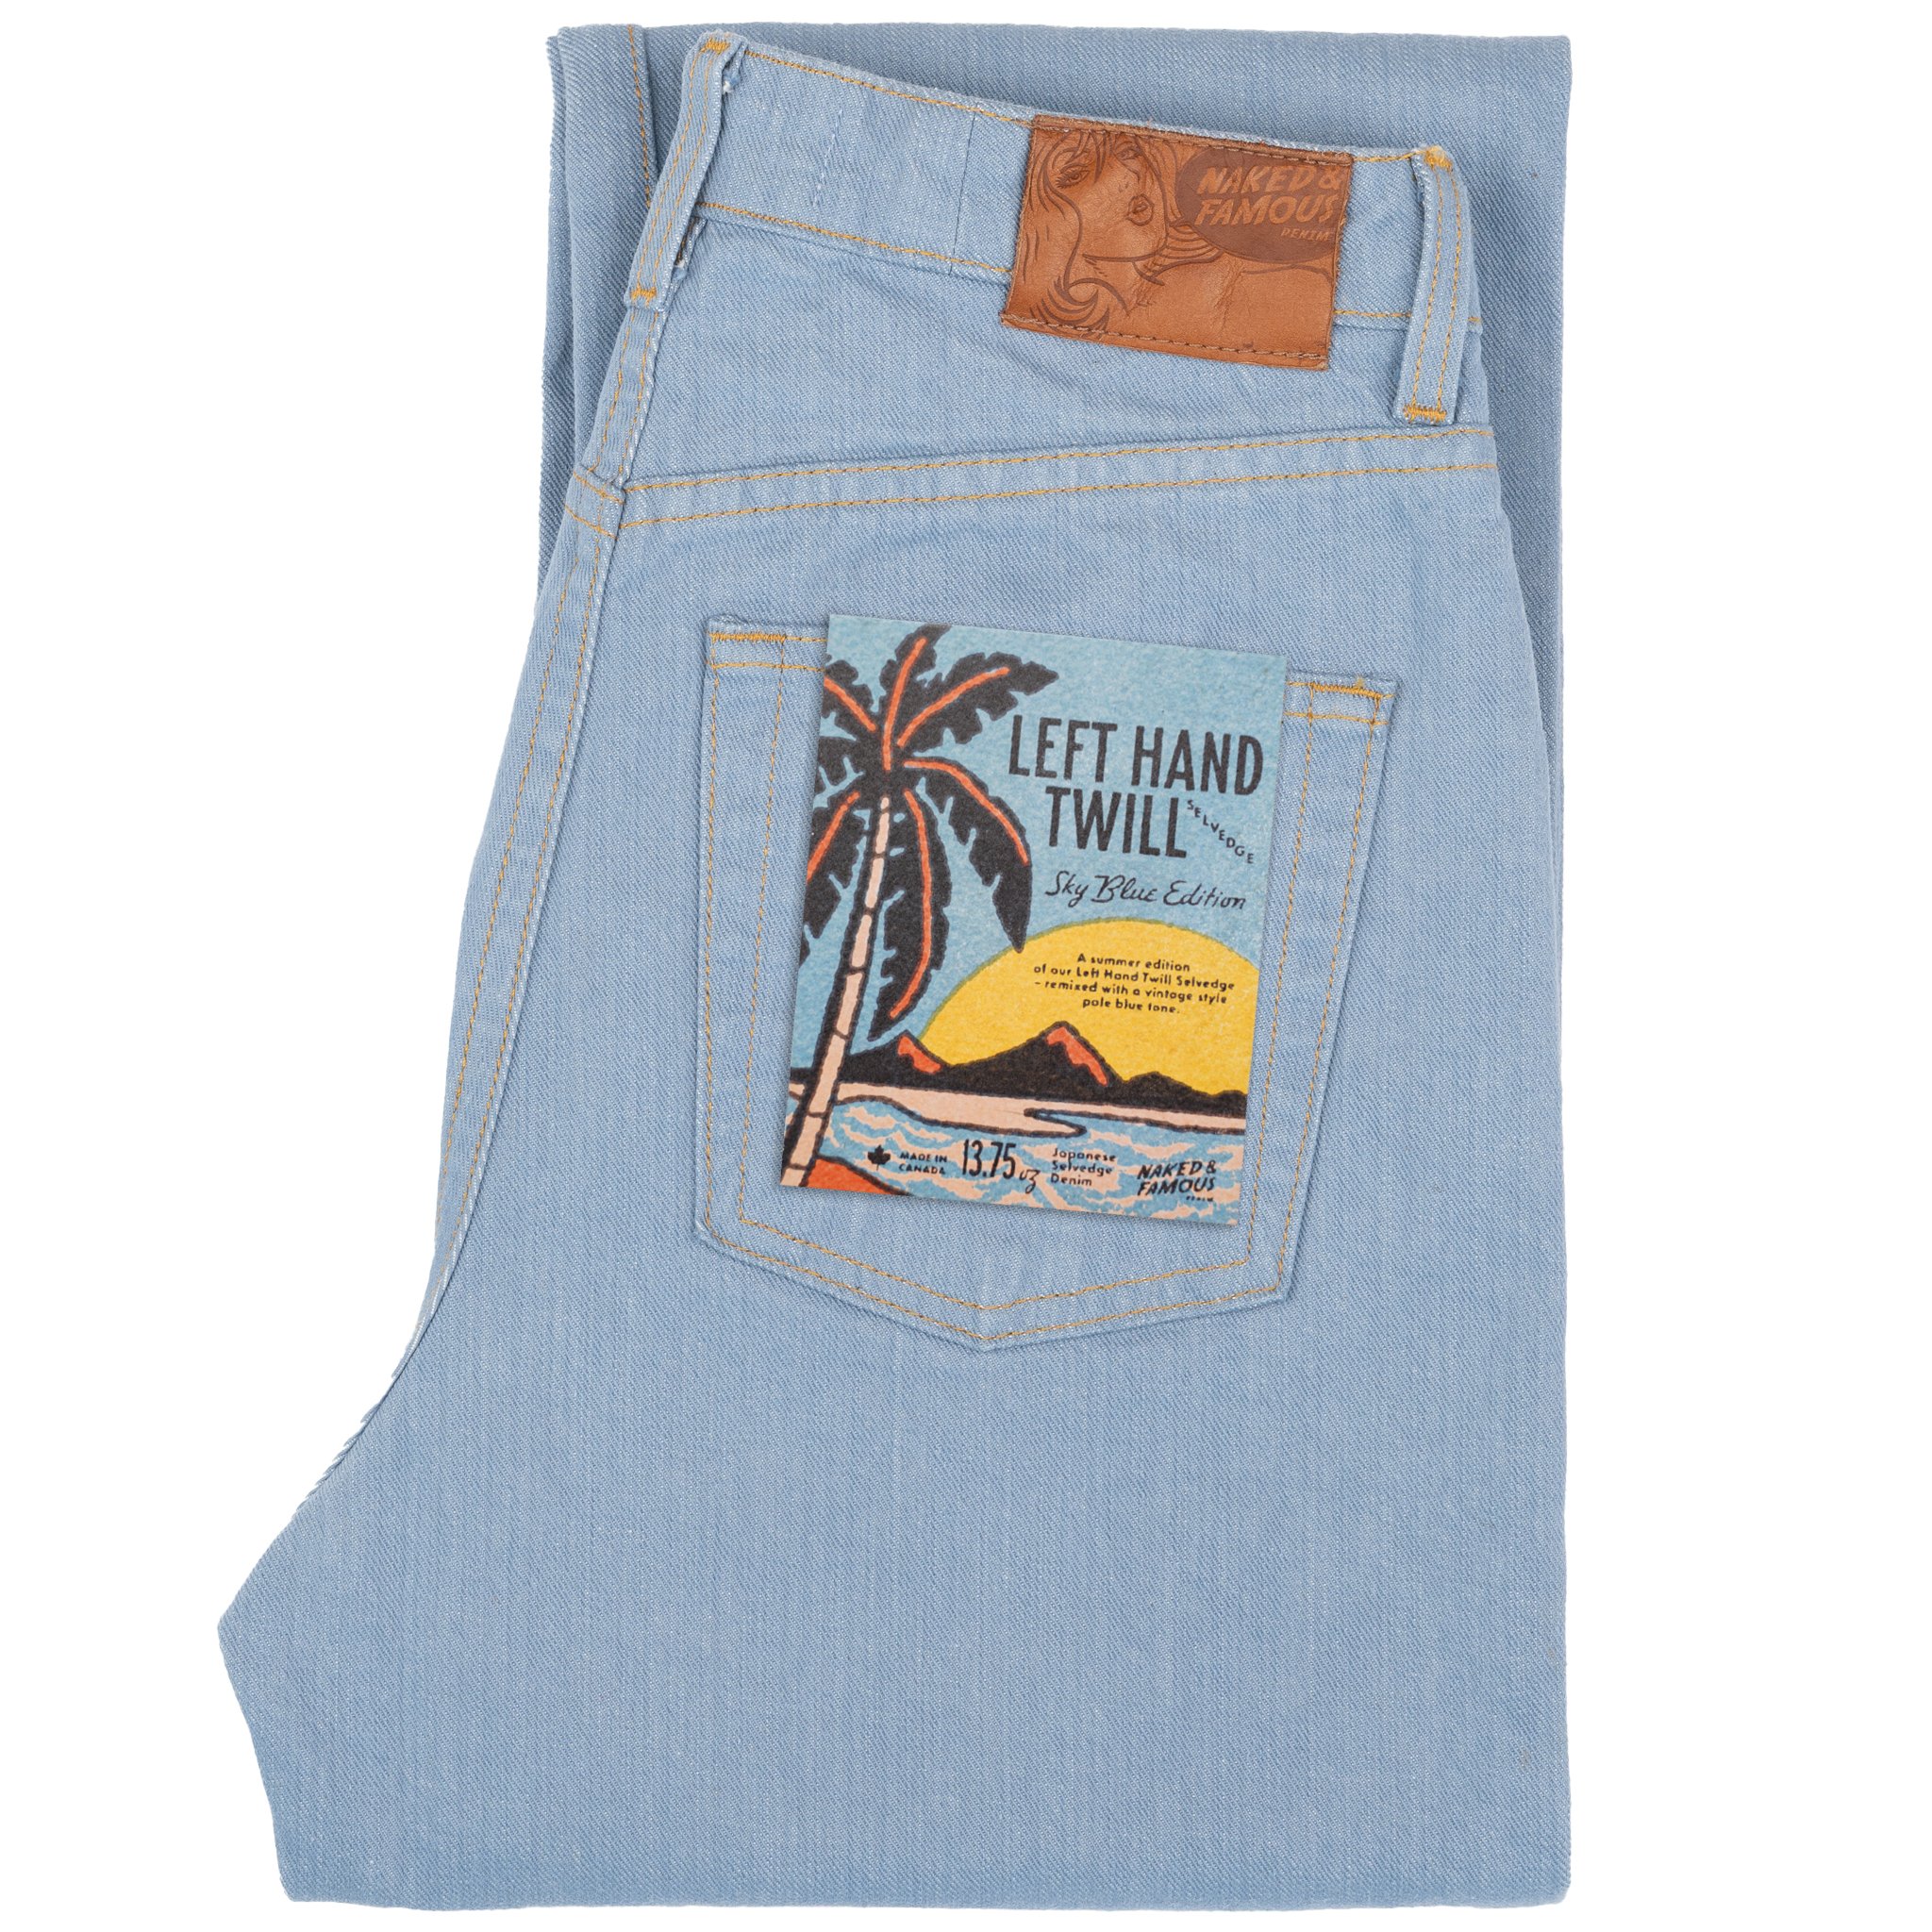  Women’s Left Hand Twill Selvedge Sky Blue Edition Jeans 